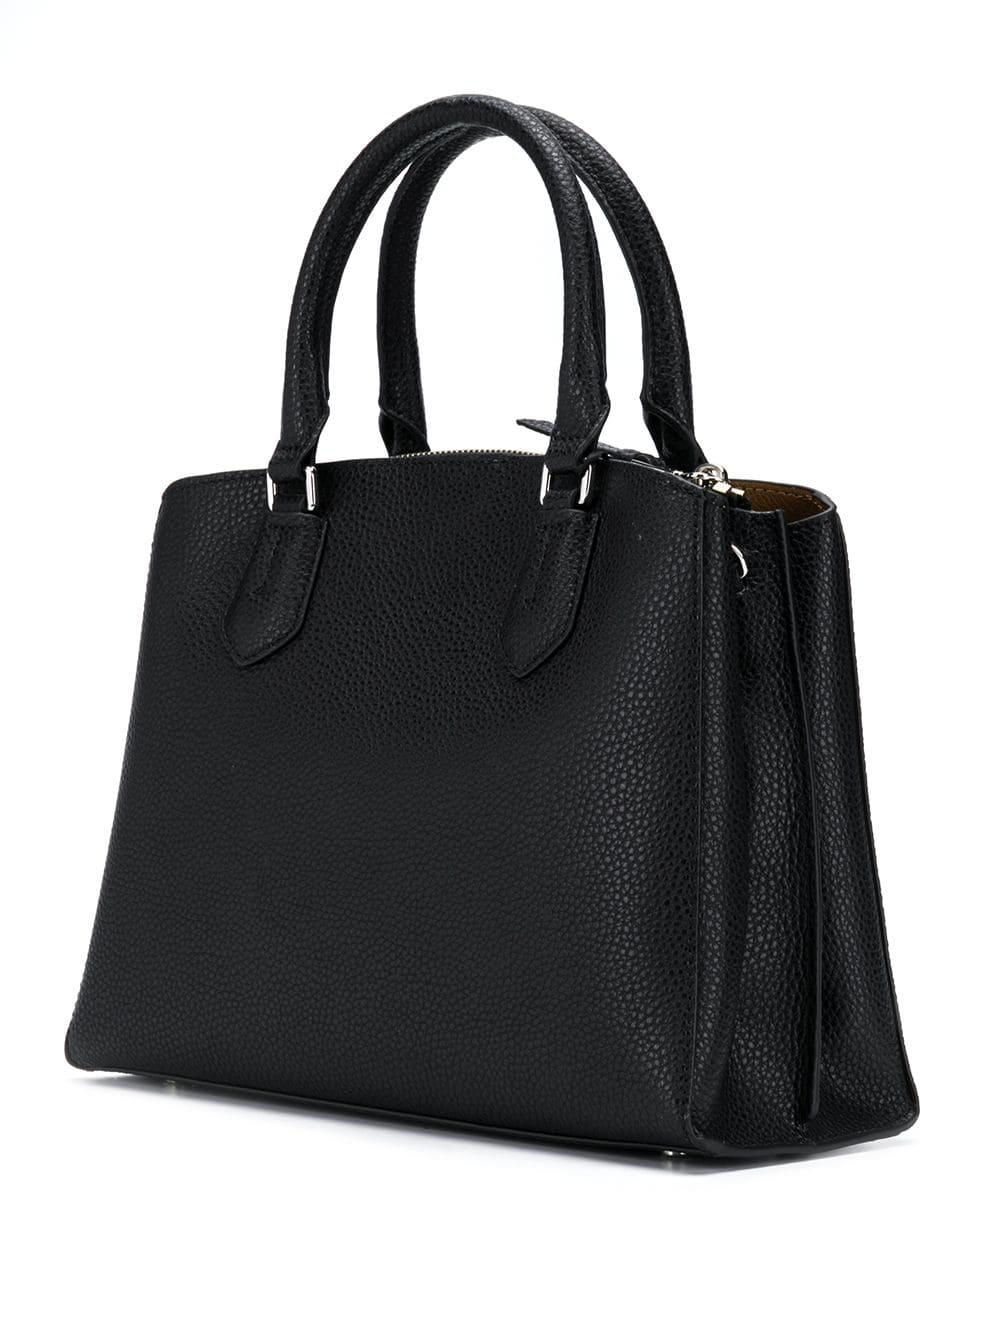 DKNY Leather Noho Media Bag in Black - Lyst